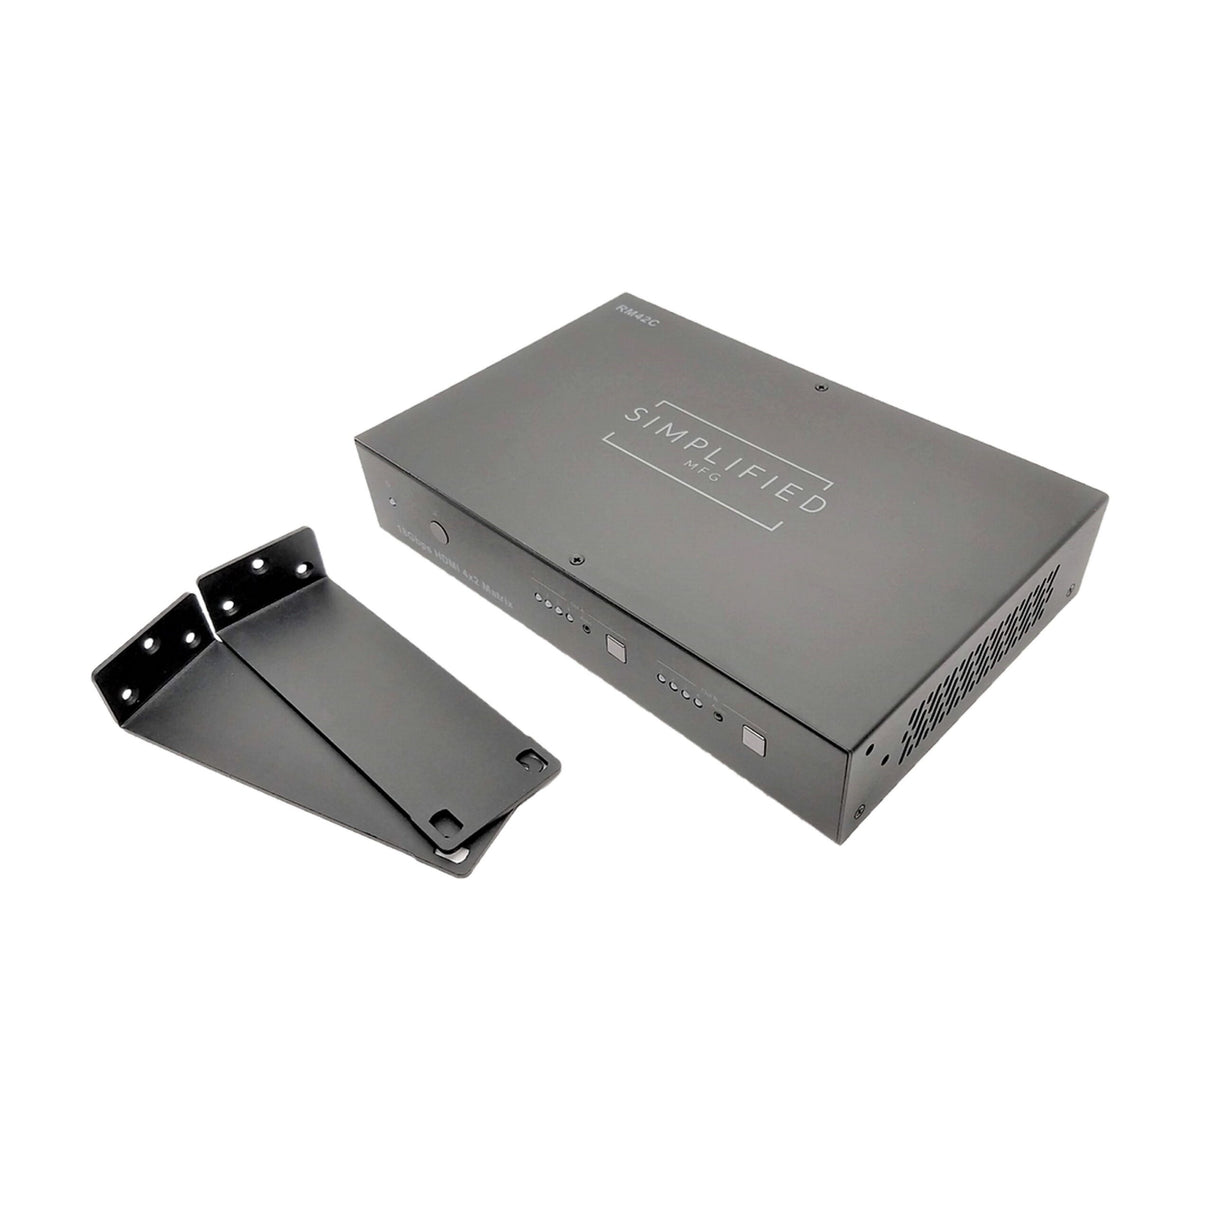 Simplified MFG RM42C 4 x 2 HDMI 18Gbps Fast Switch/Scaling Matrix Switch